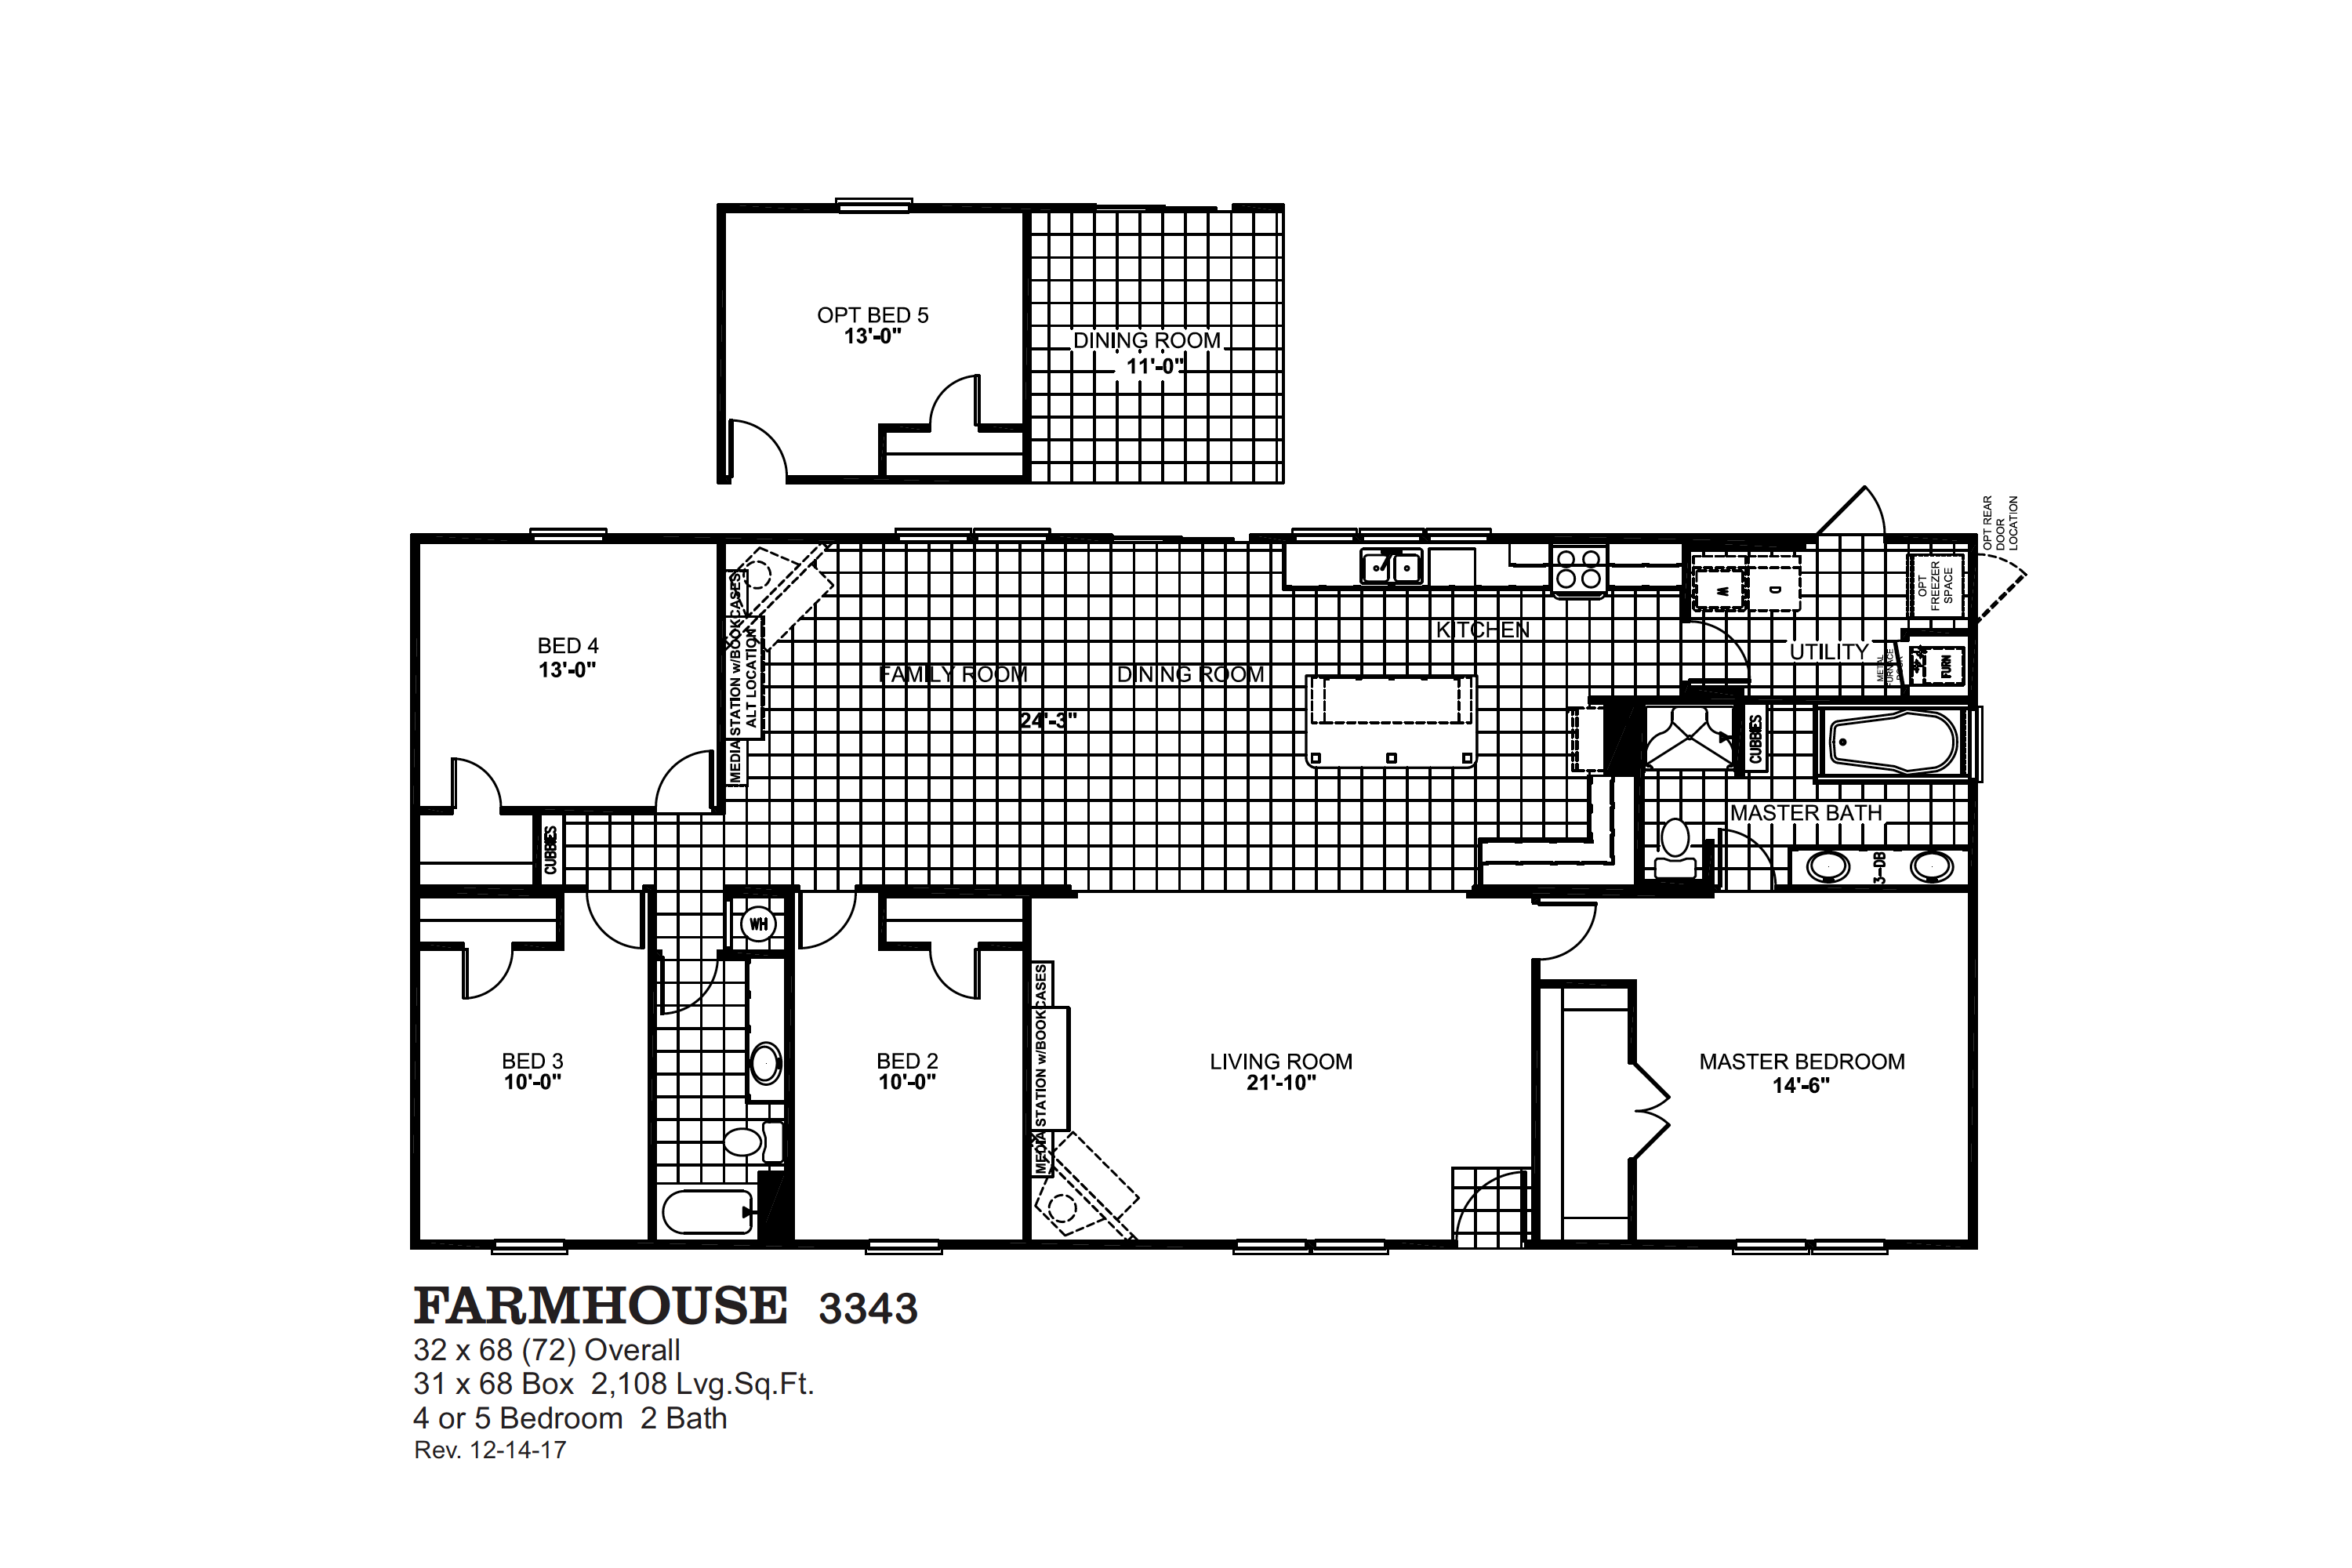 Farmhouse 3343 Floorplan